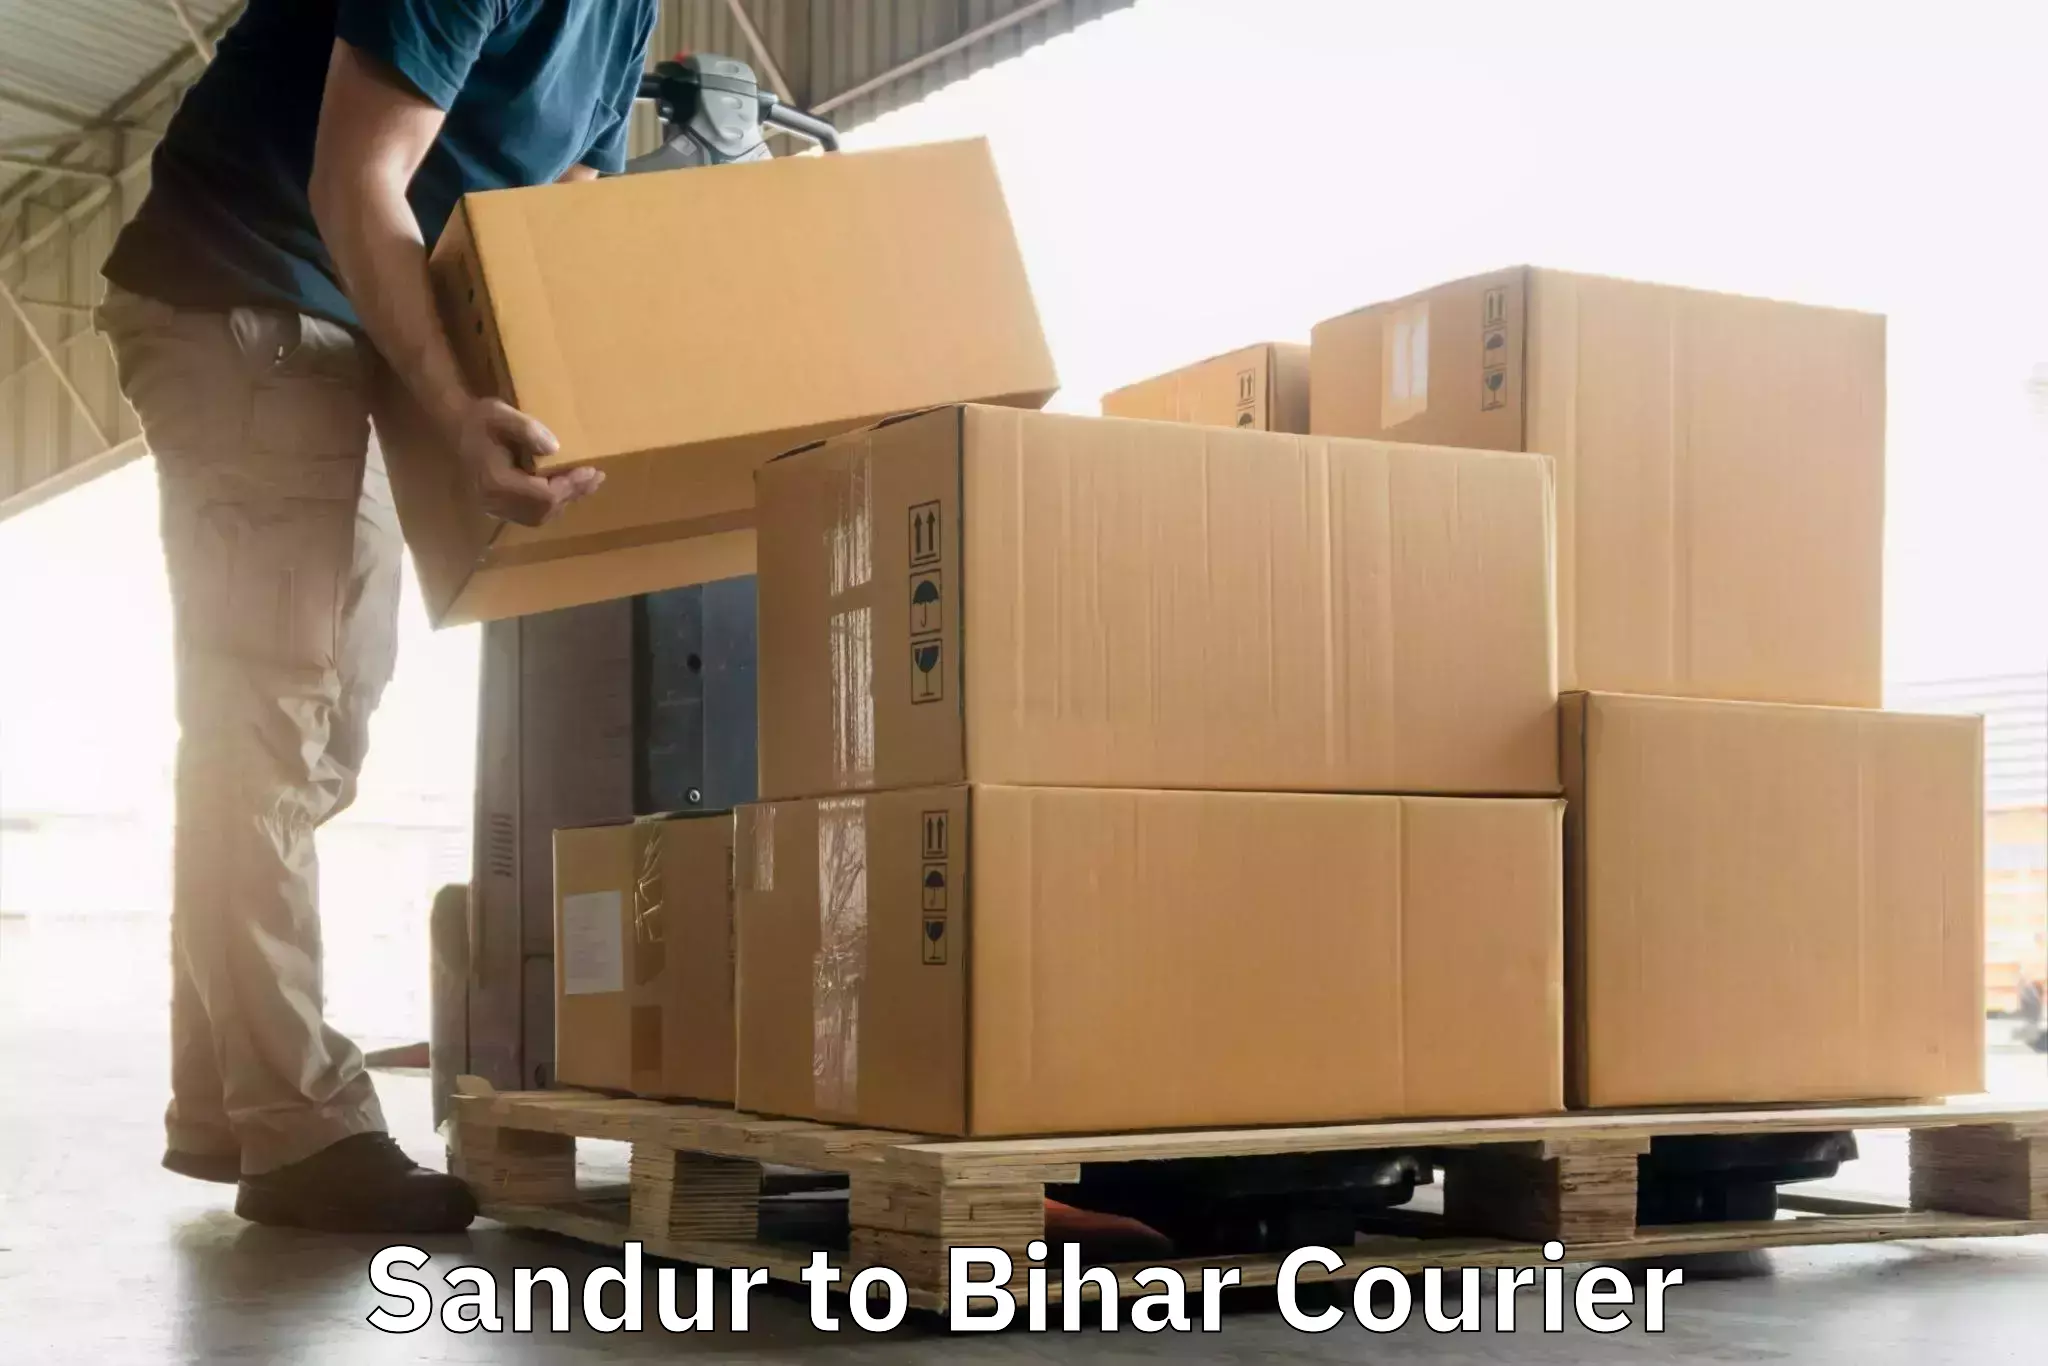 24-hour delivery options Sandur to Chakai